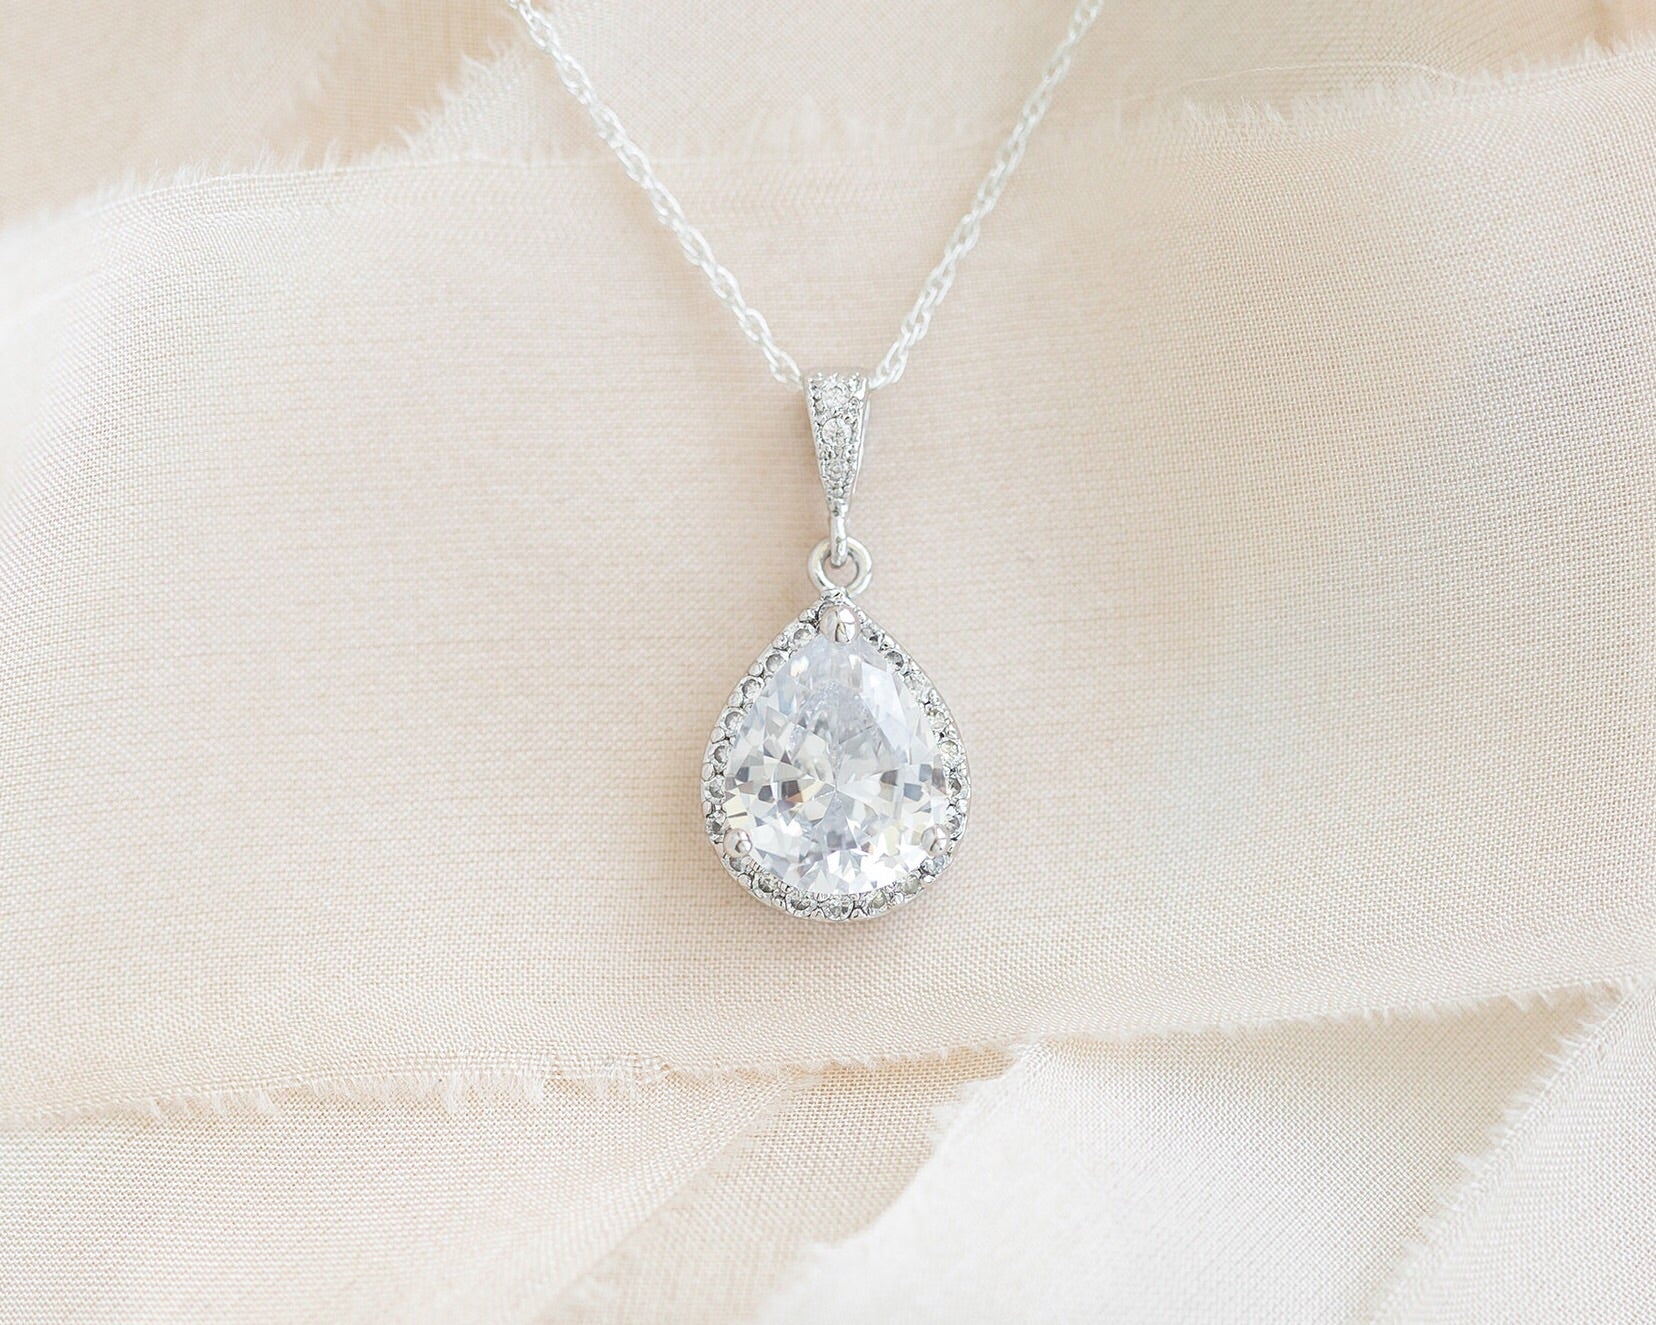 sarah walsh bridal jewellery bridal necklace crystal pendant wedding jewelry